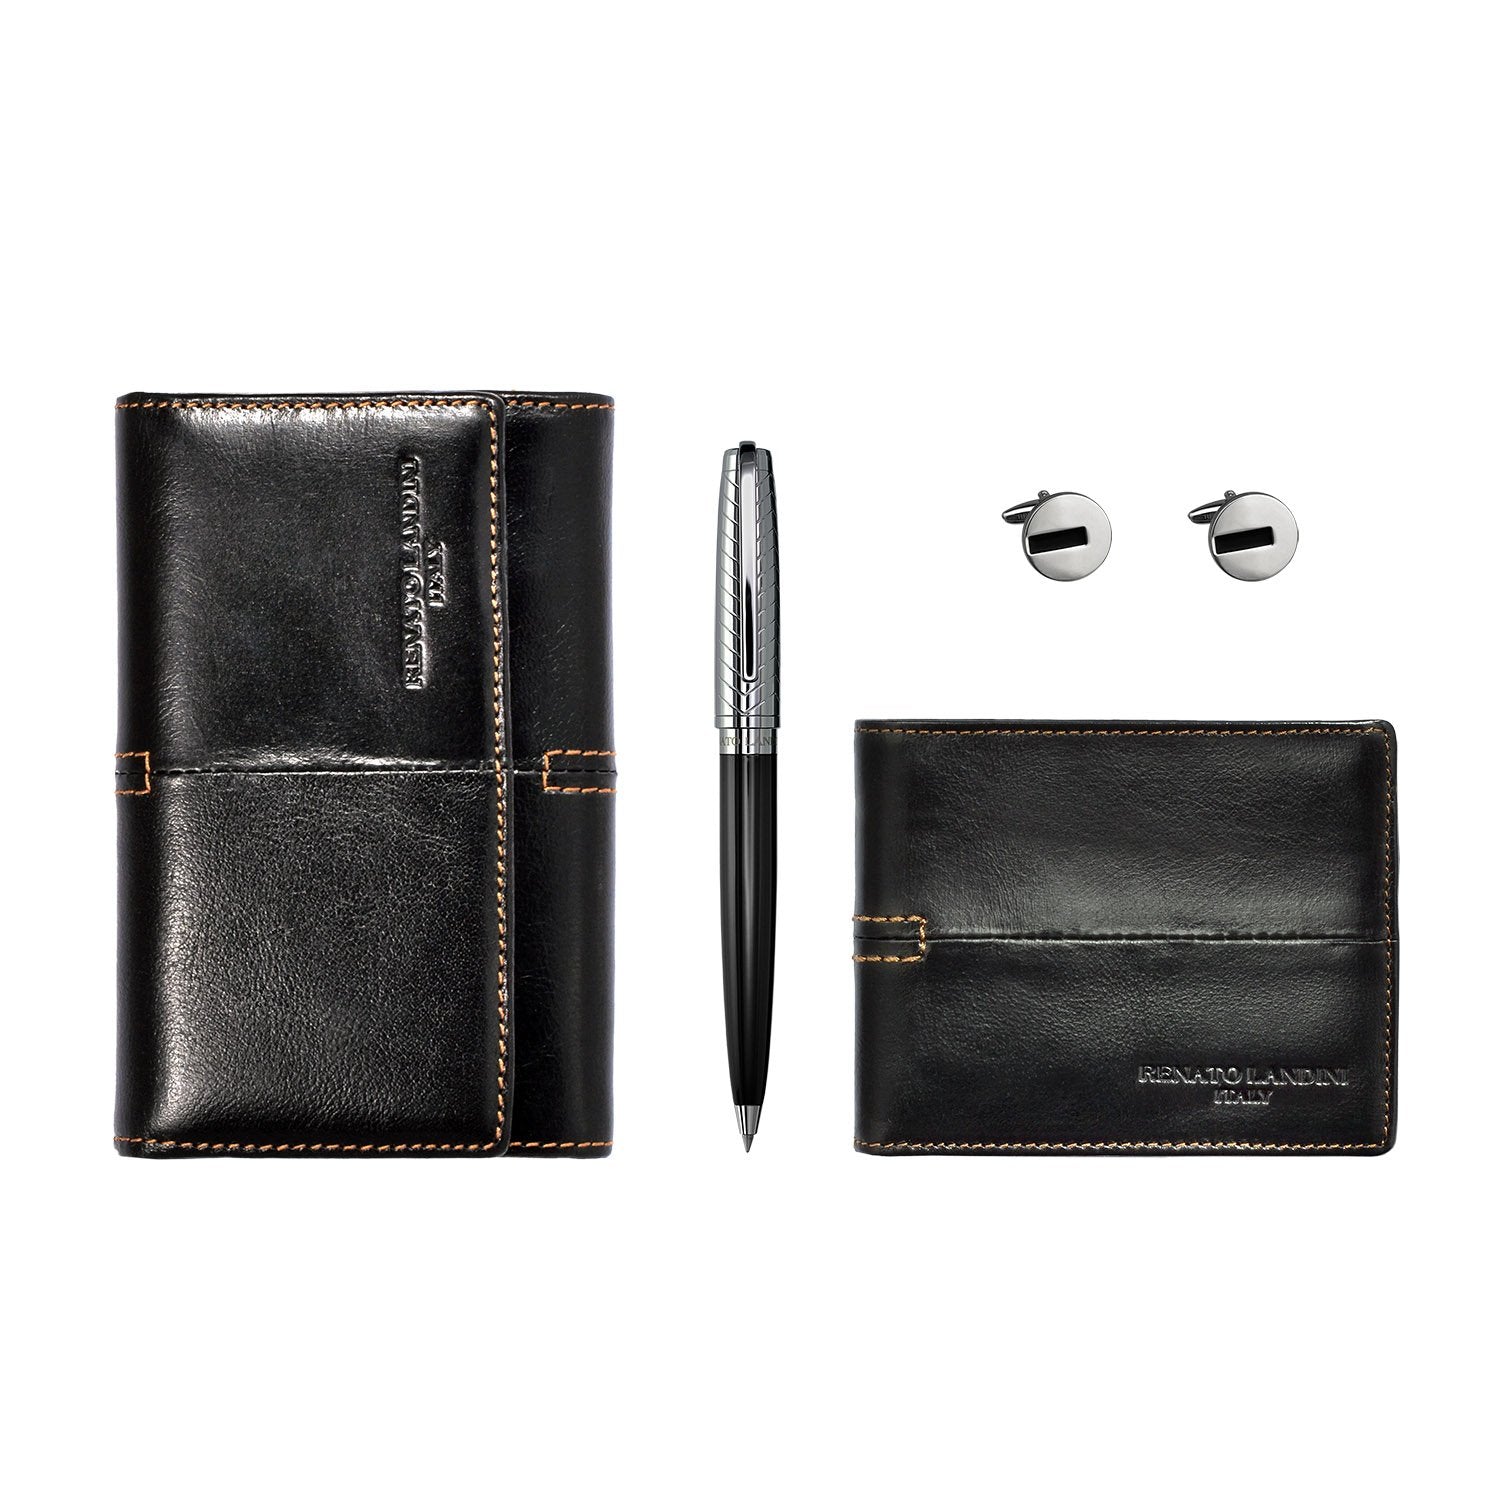 RENATO LANDINI Pen + Wallet Set + Cufflink